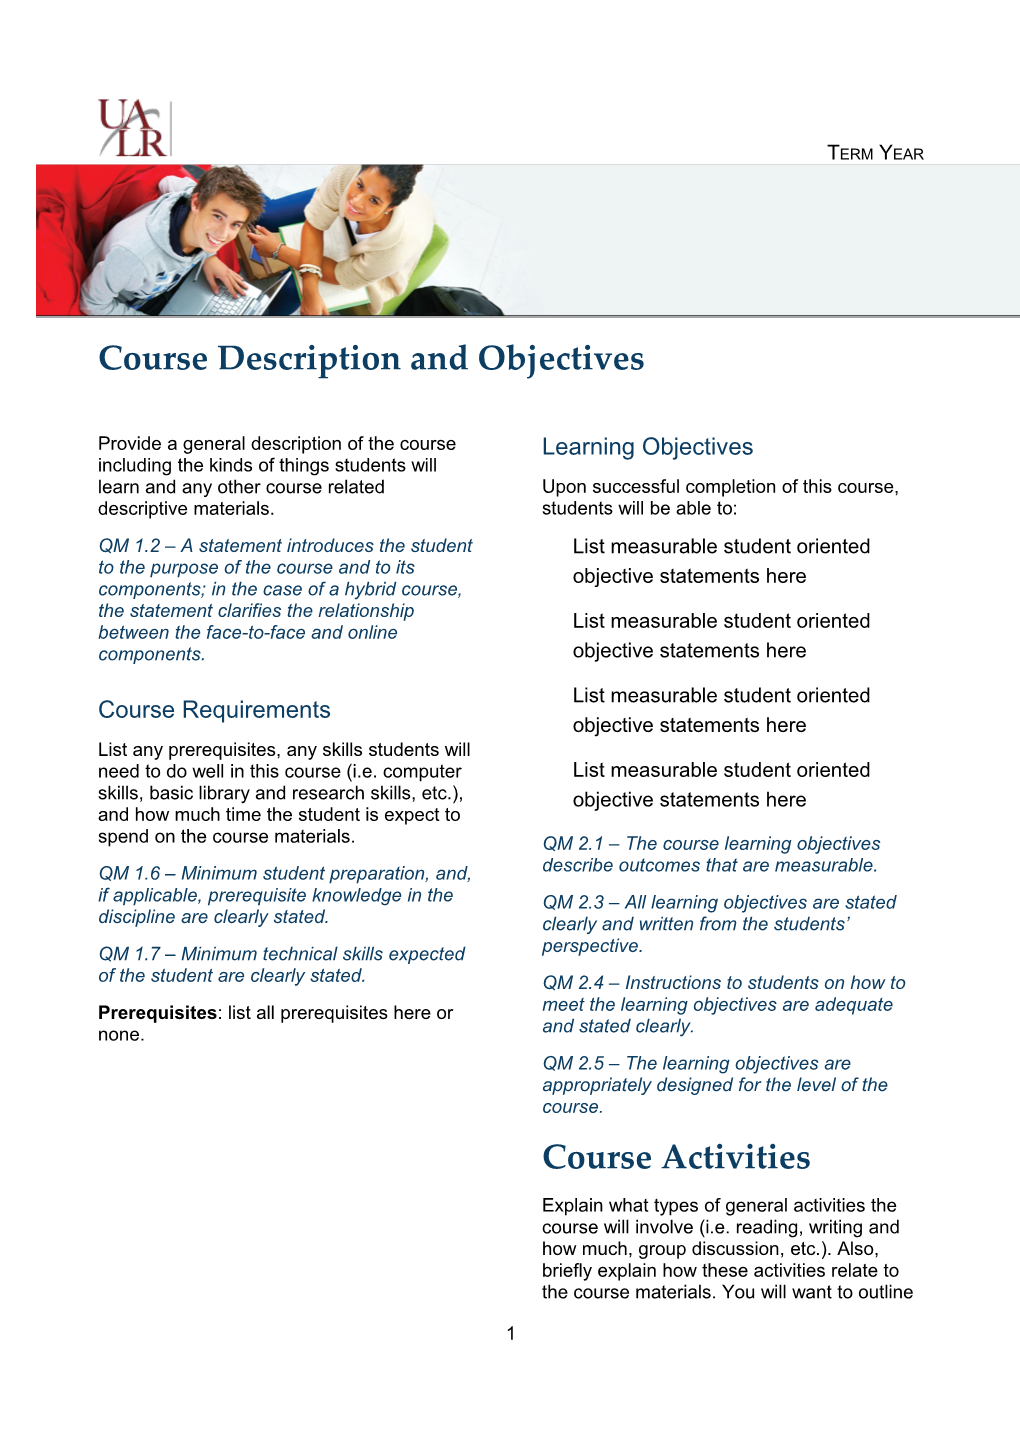 Course Description and Objectives s2